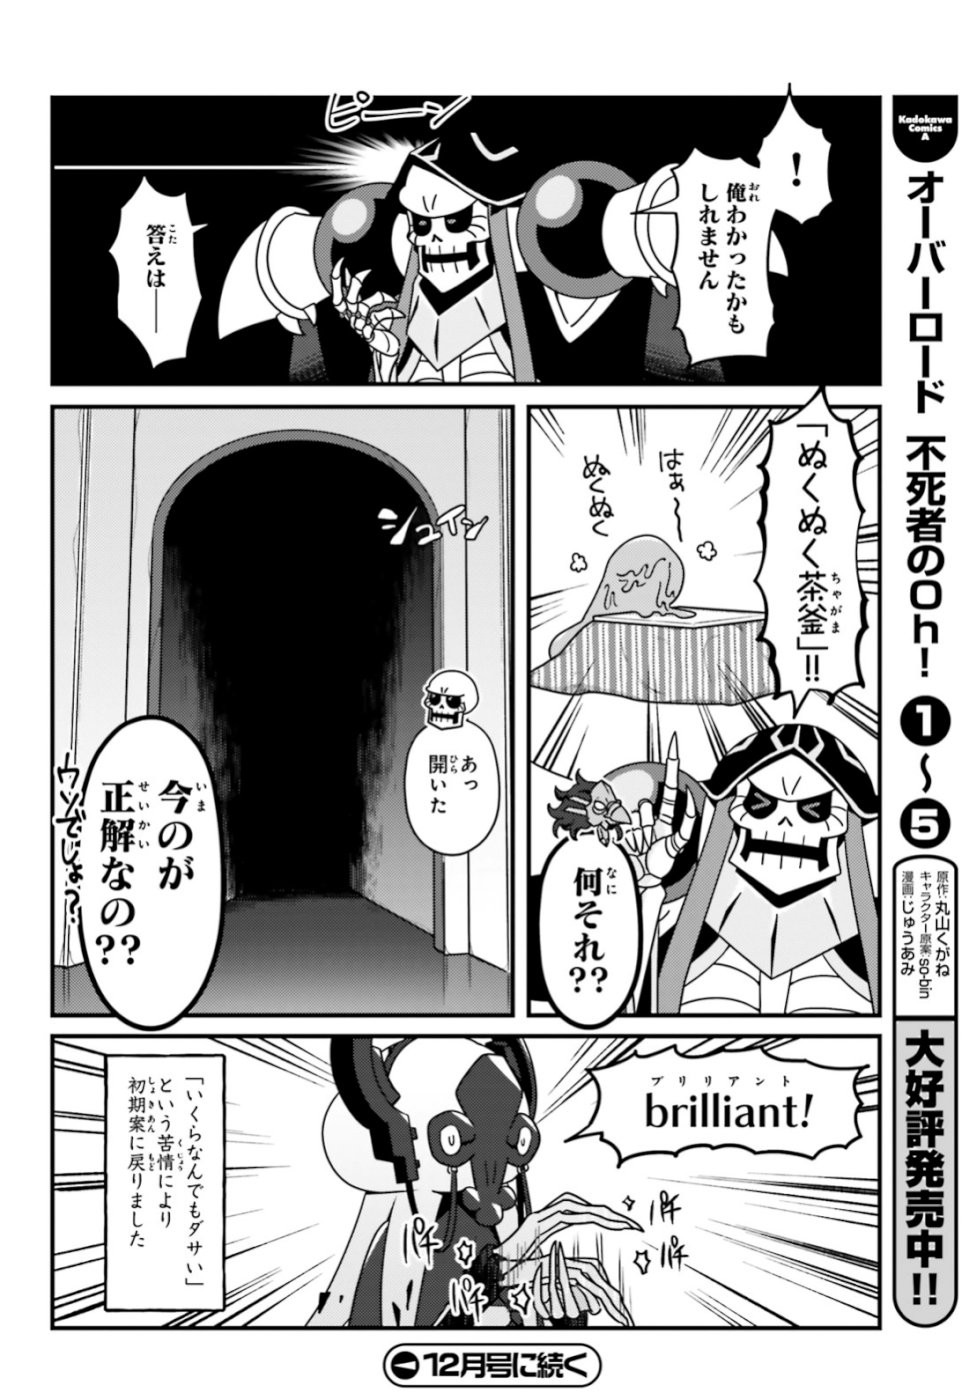 Overlord-Fushisha-no-Oh - Chapter 32-1 - Page 20